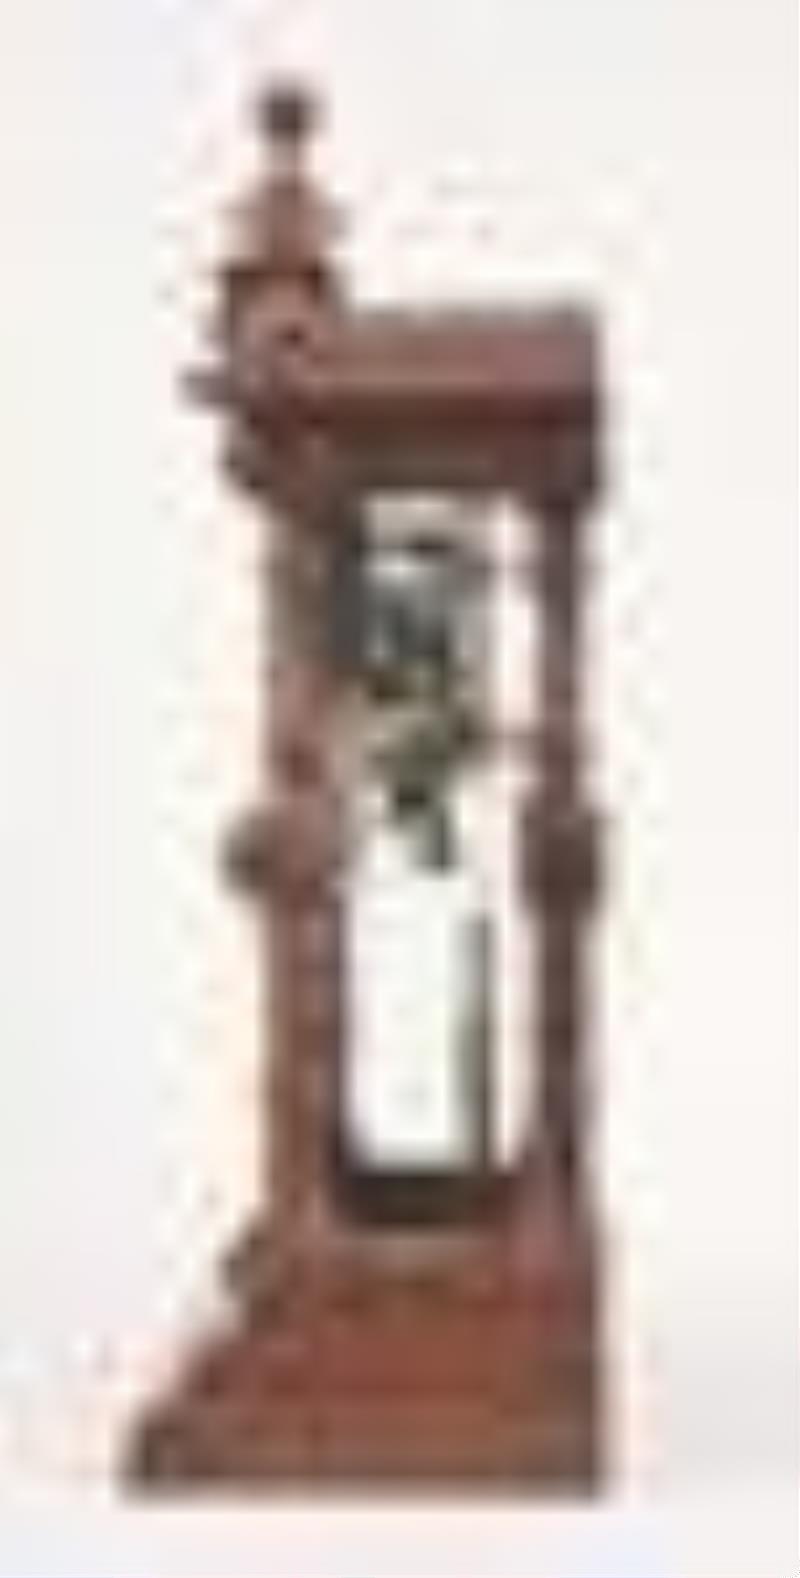 A Welch Patti VP shelf or mantel clock